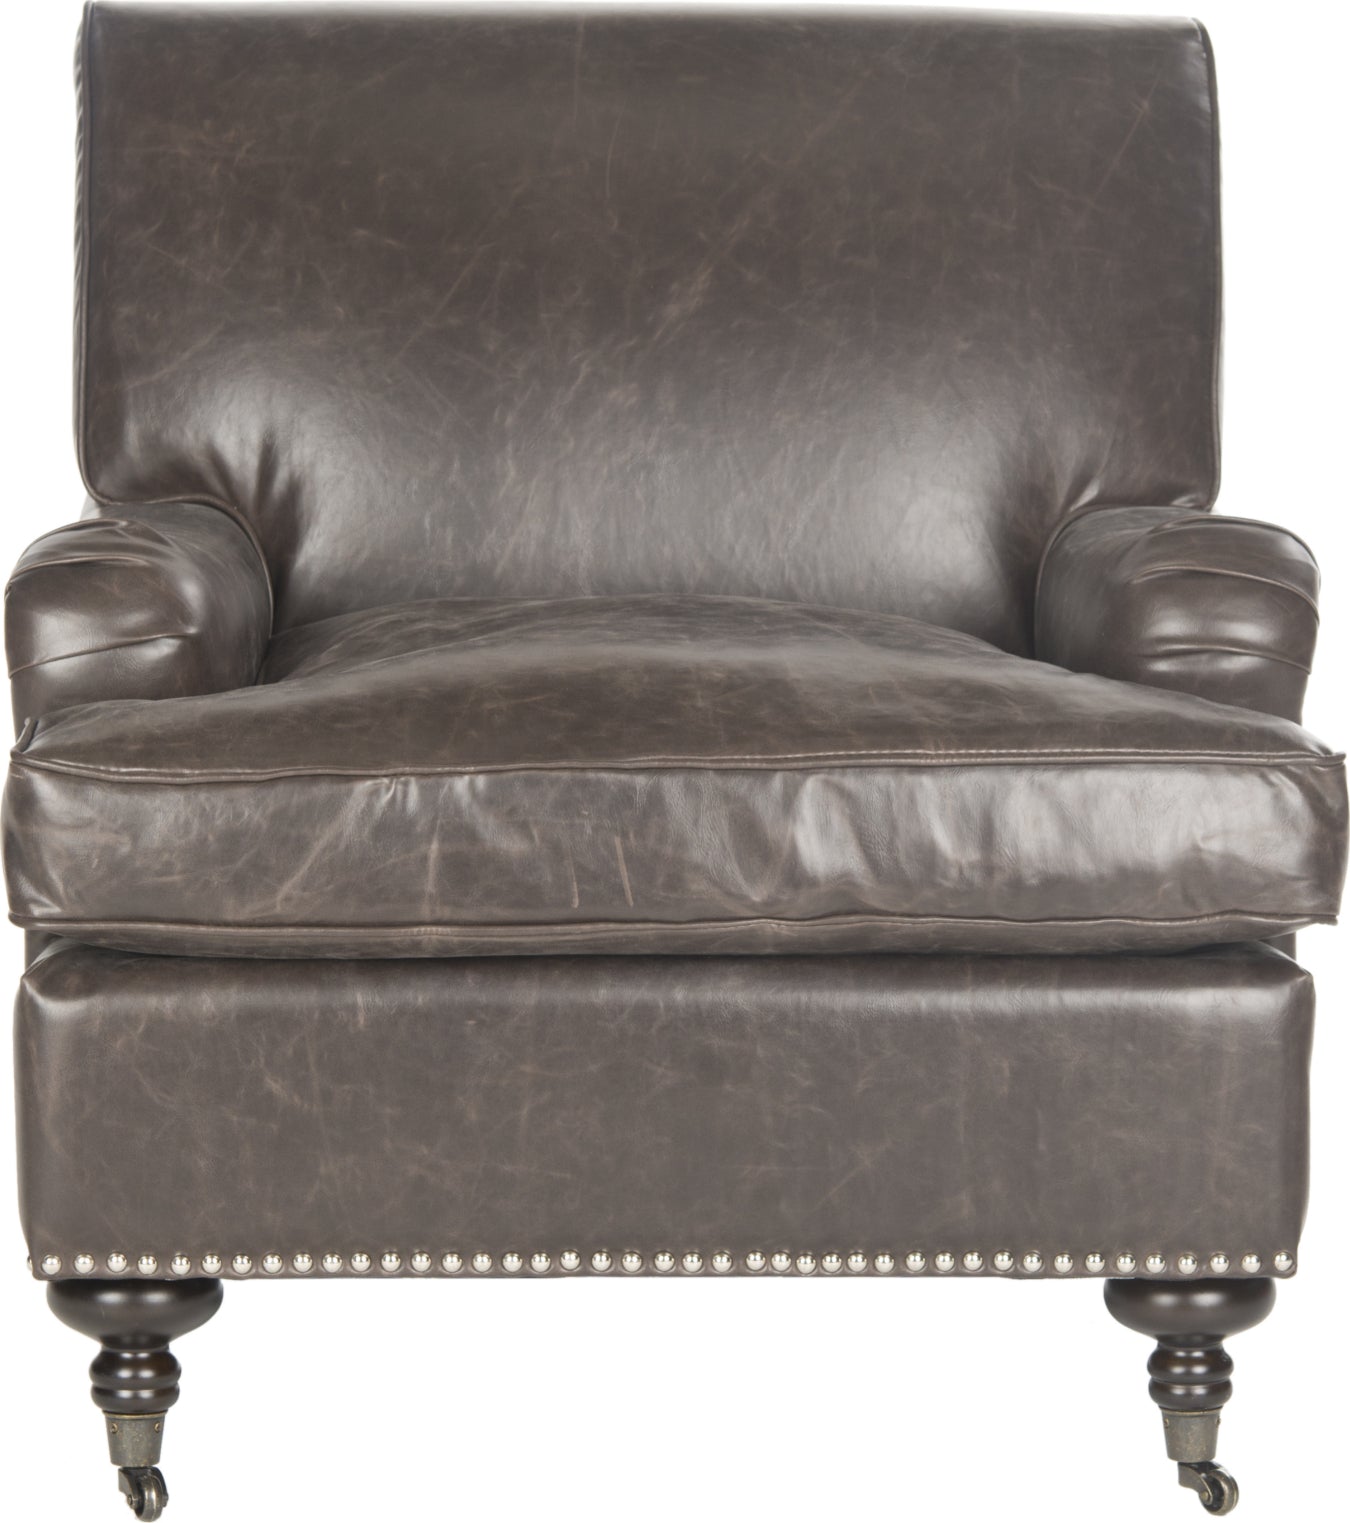 Safavieh Chloe Club Chair Antique Brown and Espresso Furniture main image